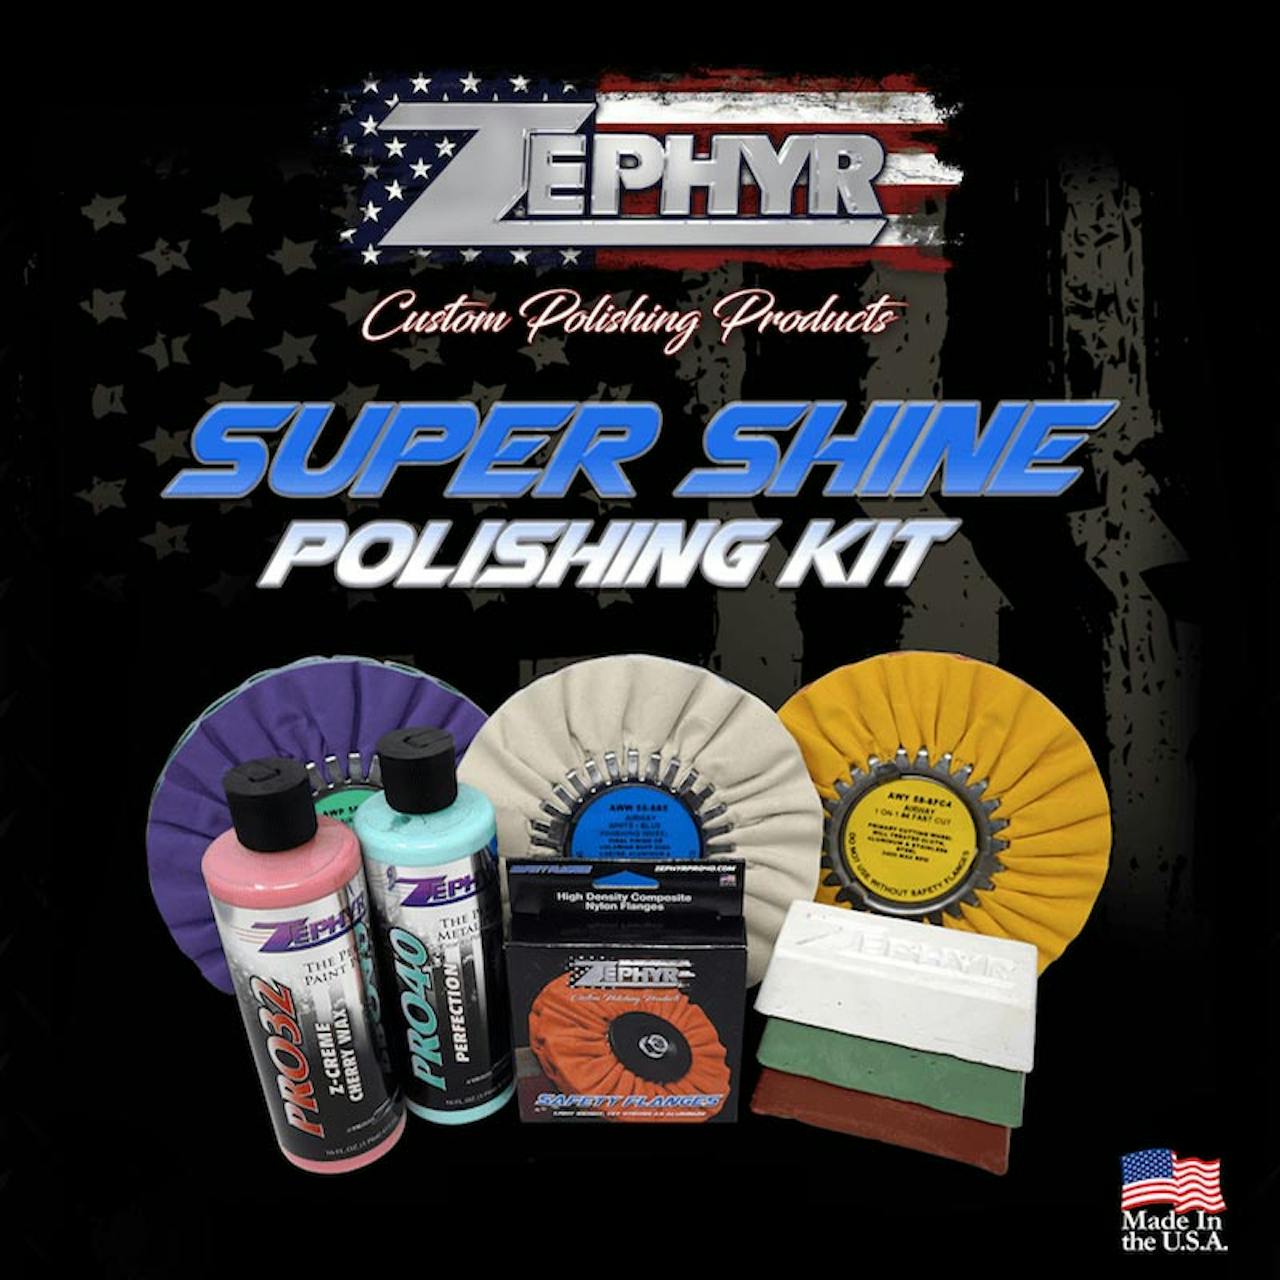 Zephyr Super Shine 'X' Polishing Kit